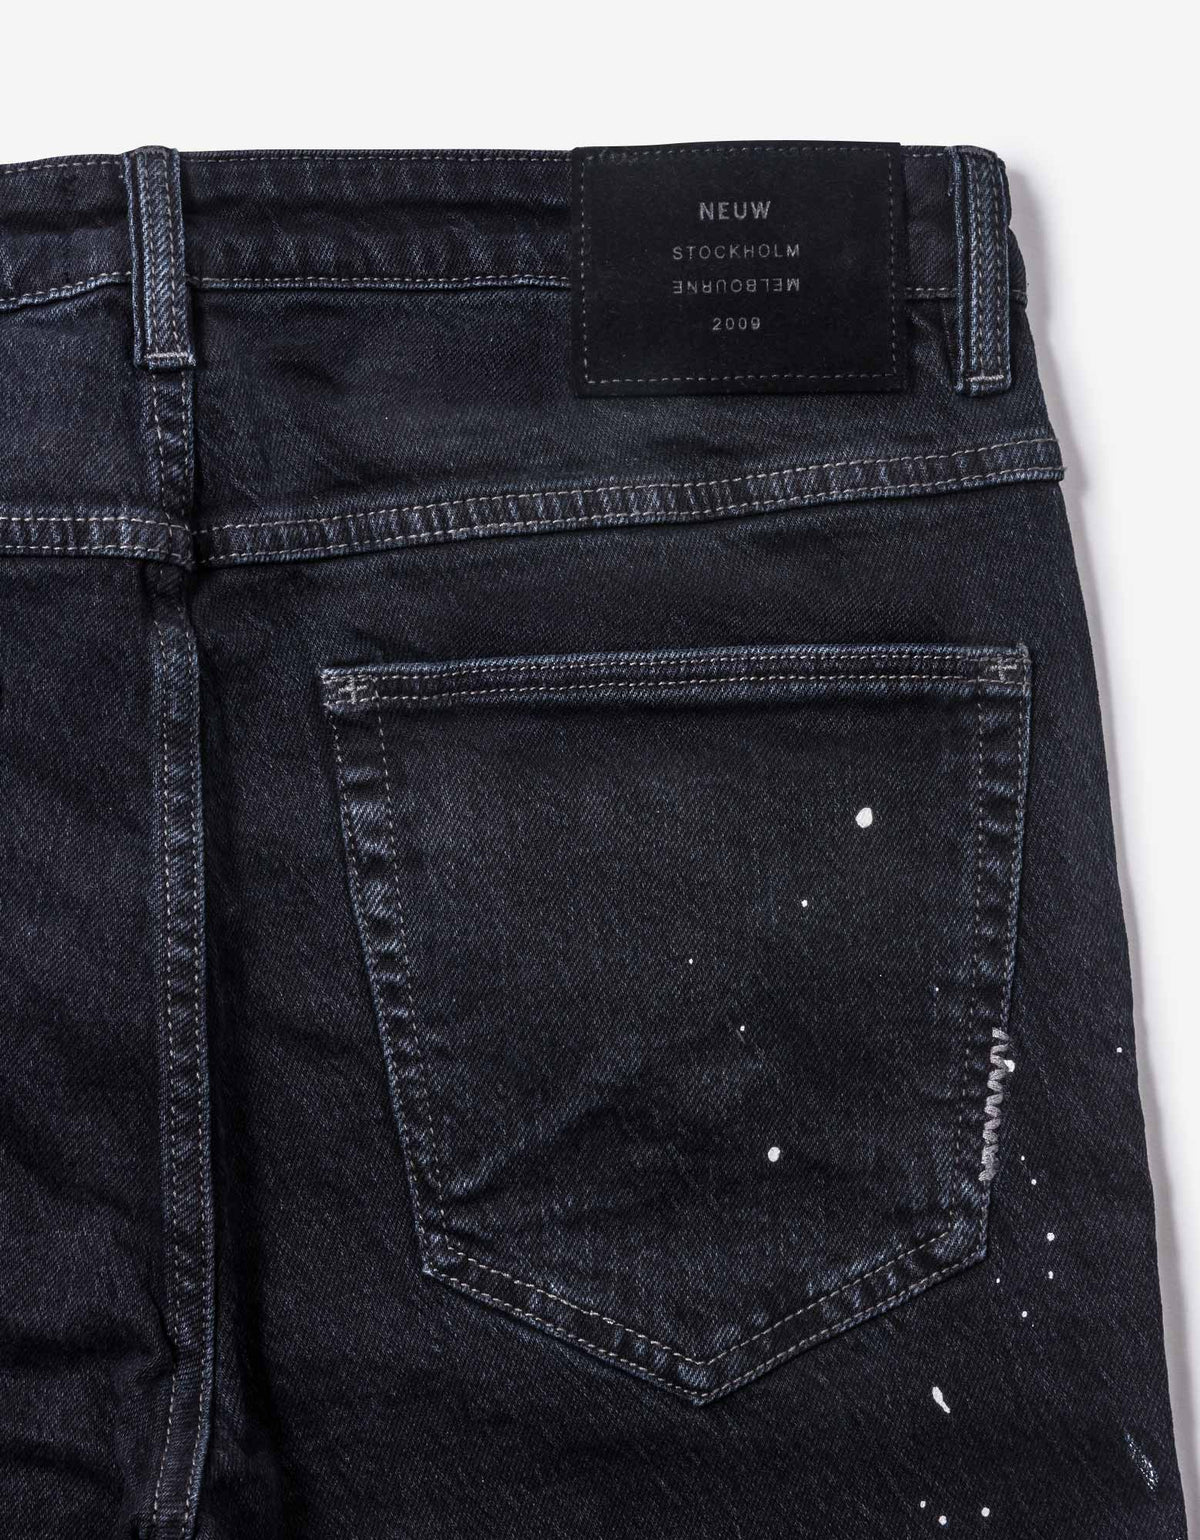 Neuw Rebel Skinny Unguarded Art Washed Black Jeans